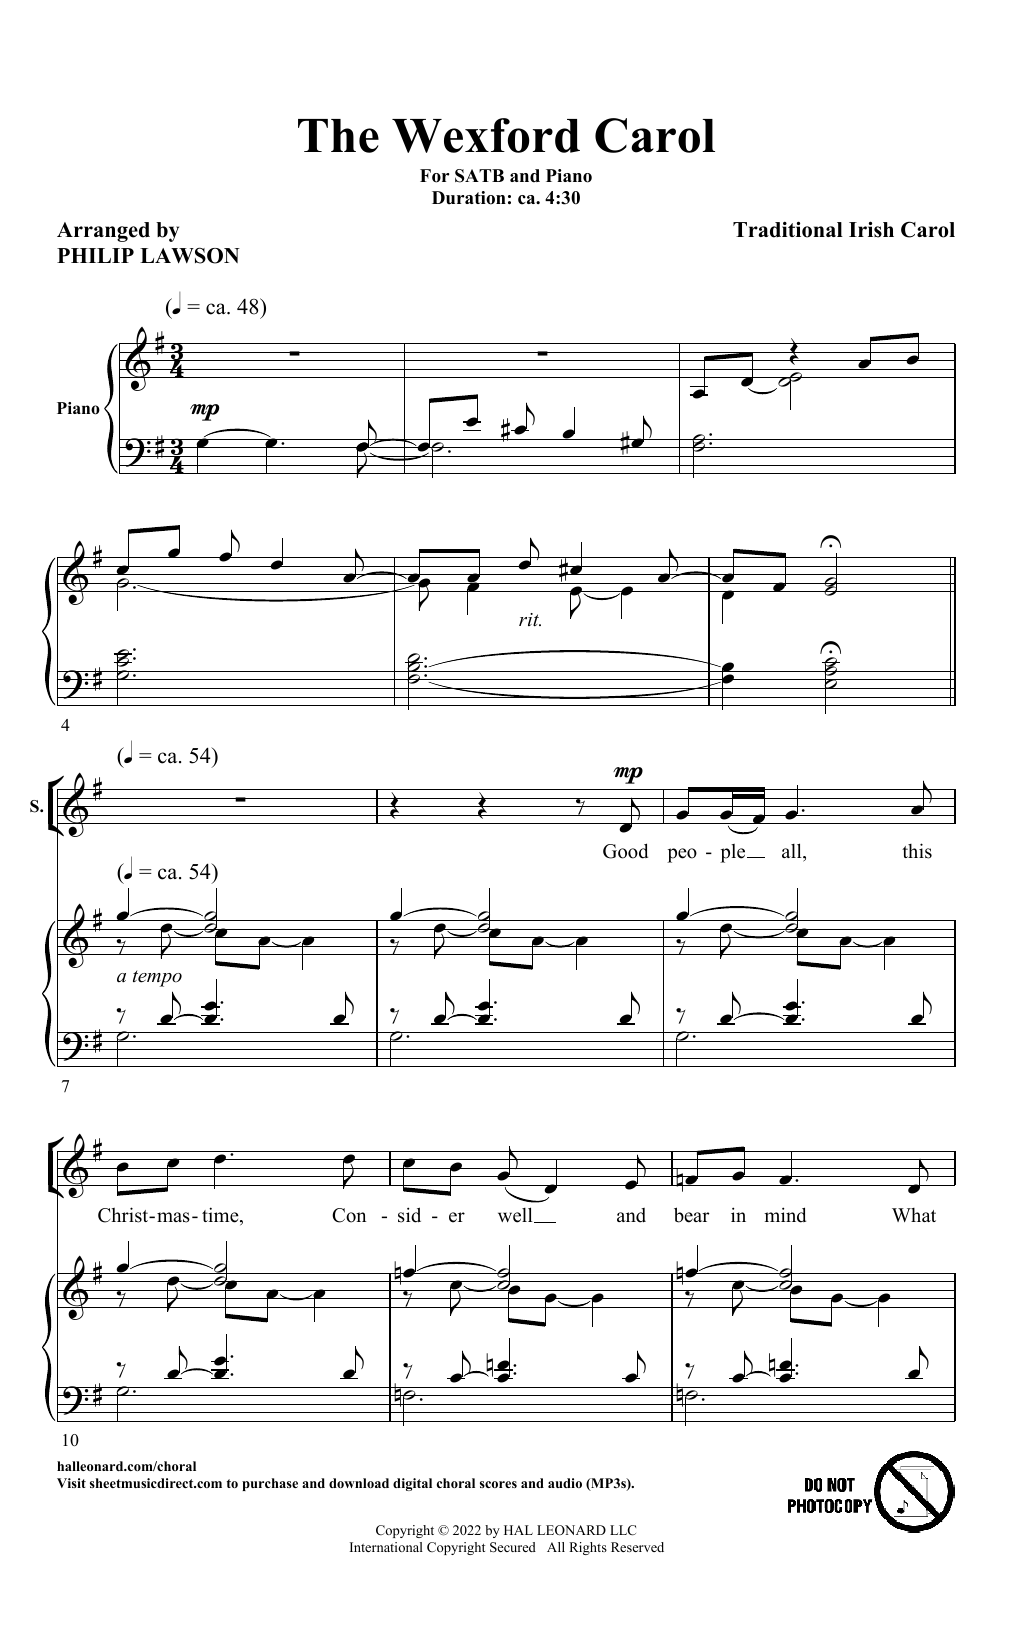 Traditional Irish Carol The Wexford Carol (arr. Philip Lawson) sheet music notes and chords arranged for SATB Choir